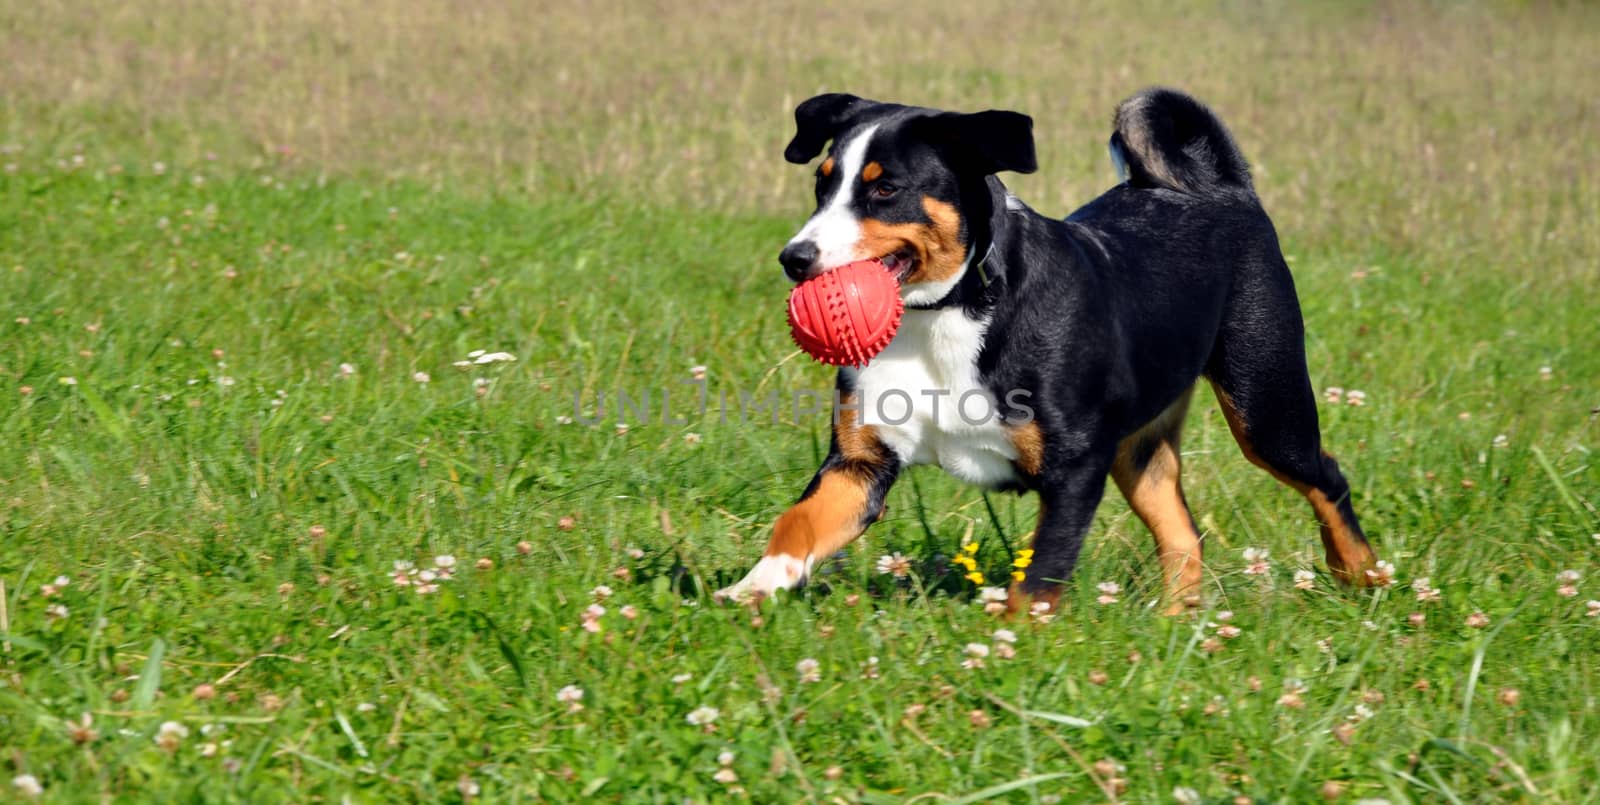 Appenzell cattle dog running on the green grass